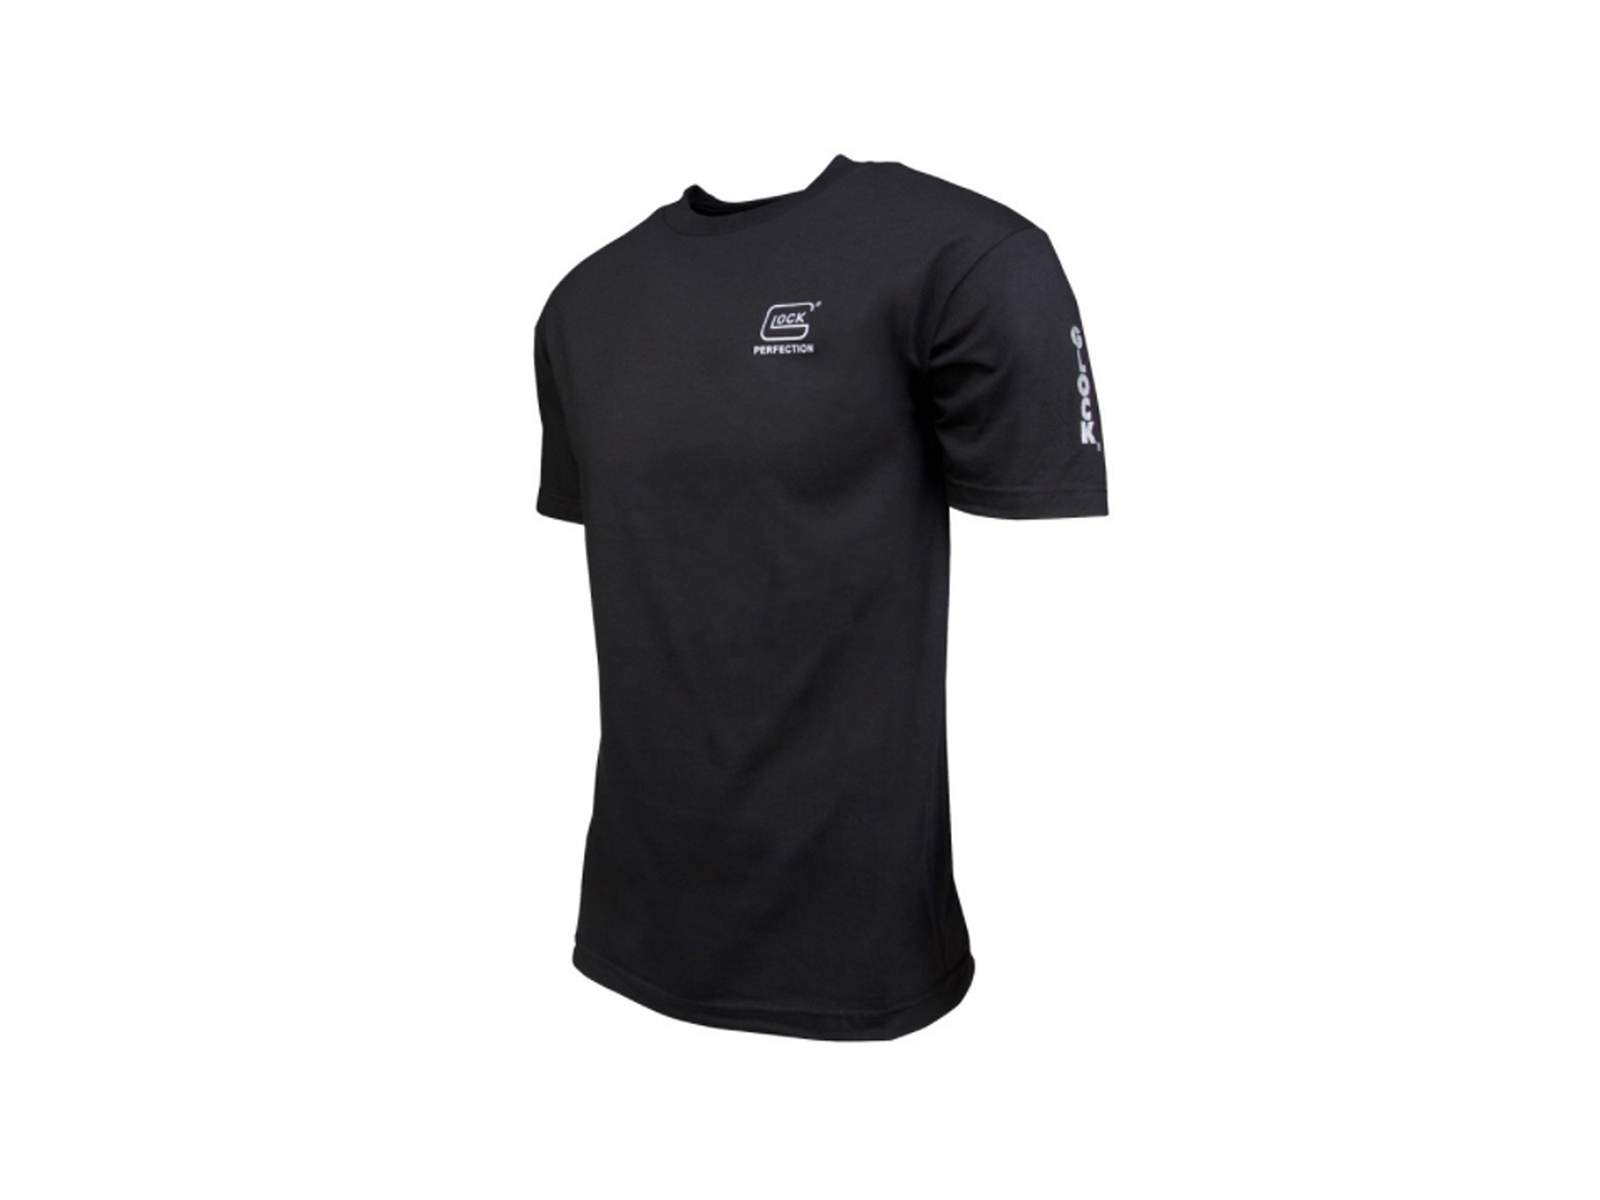 GLOCK APPAREL/SHIRT PERFECTION Tシャツ Black (size M)